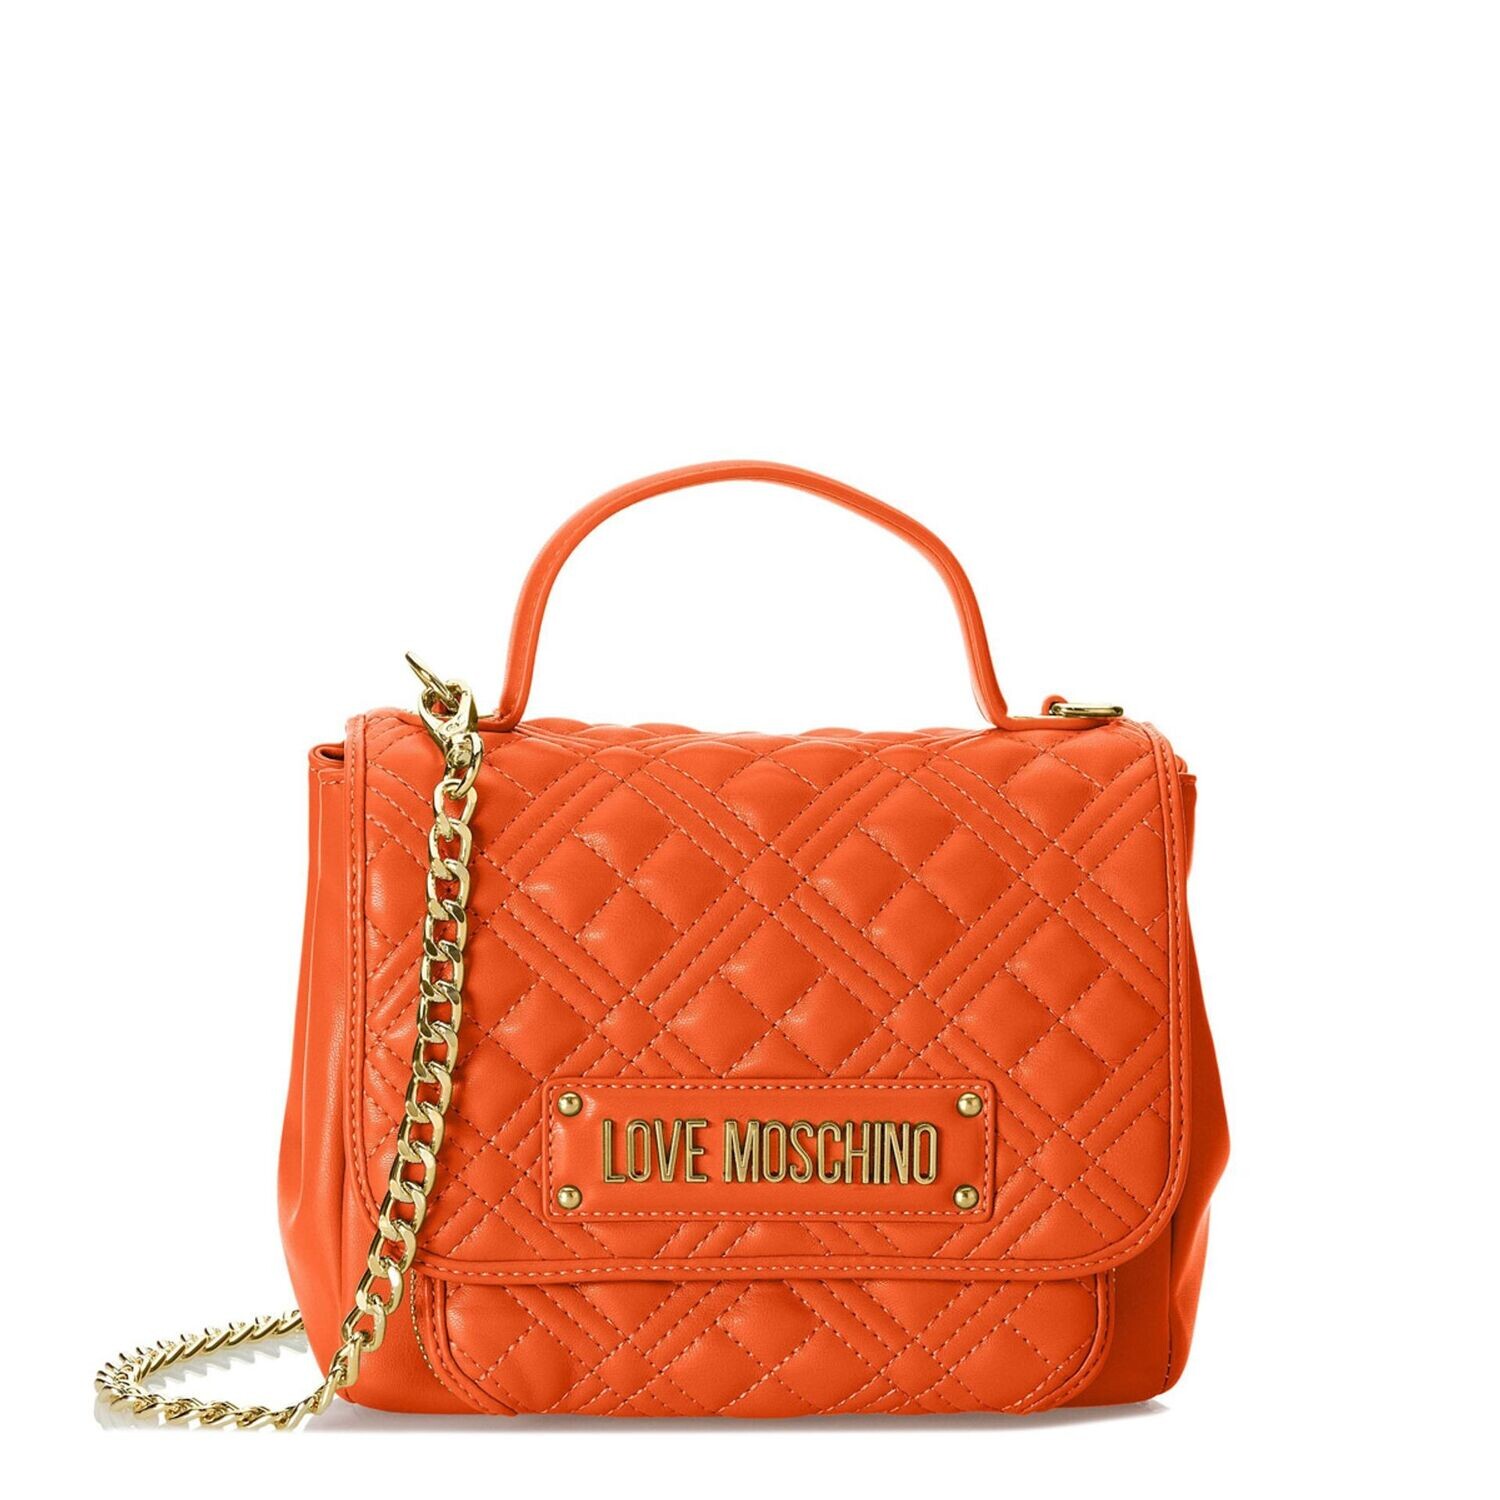 Love Moschino Orange Patterned Handbag